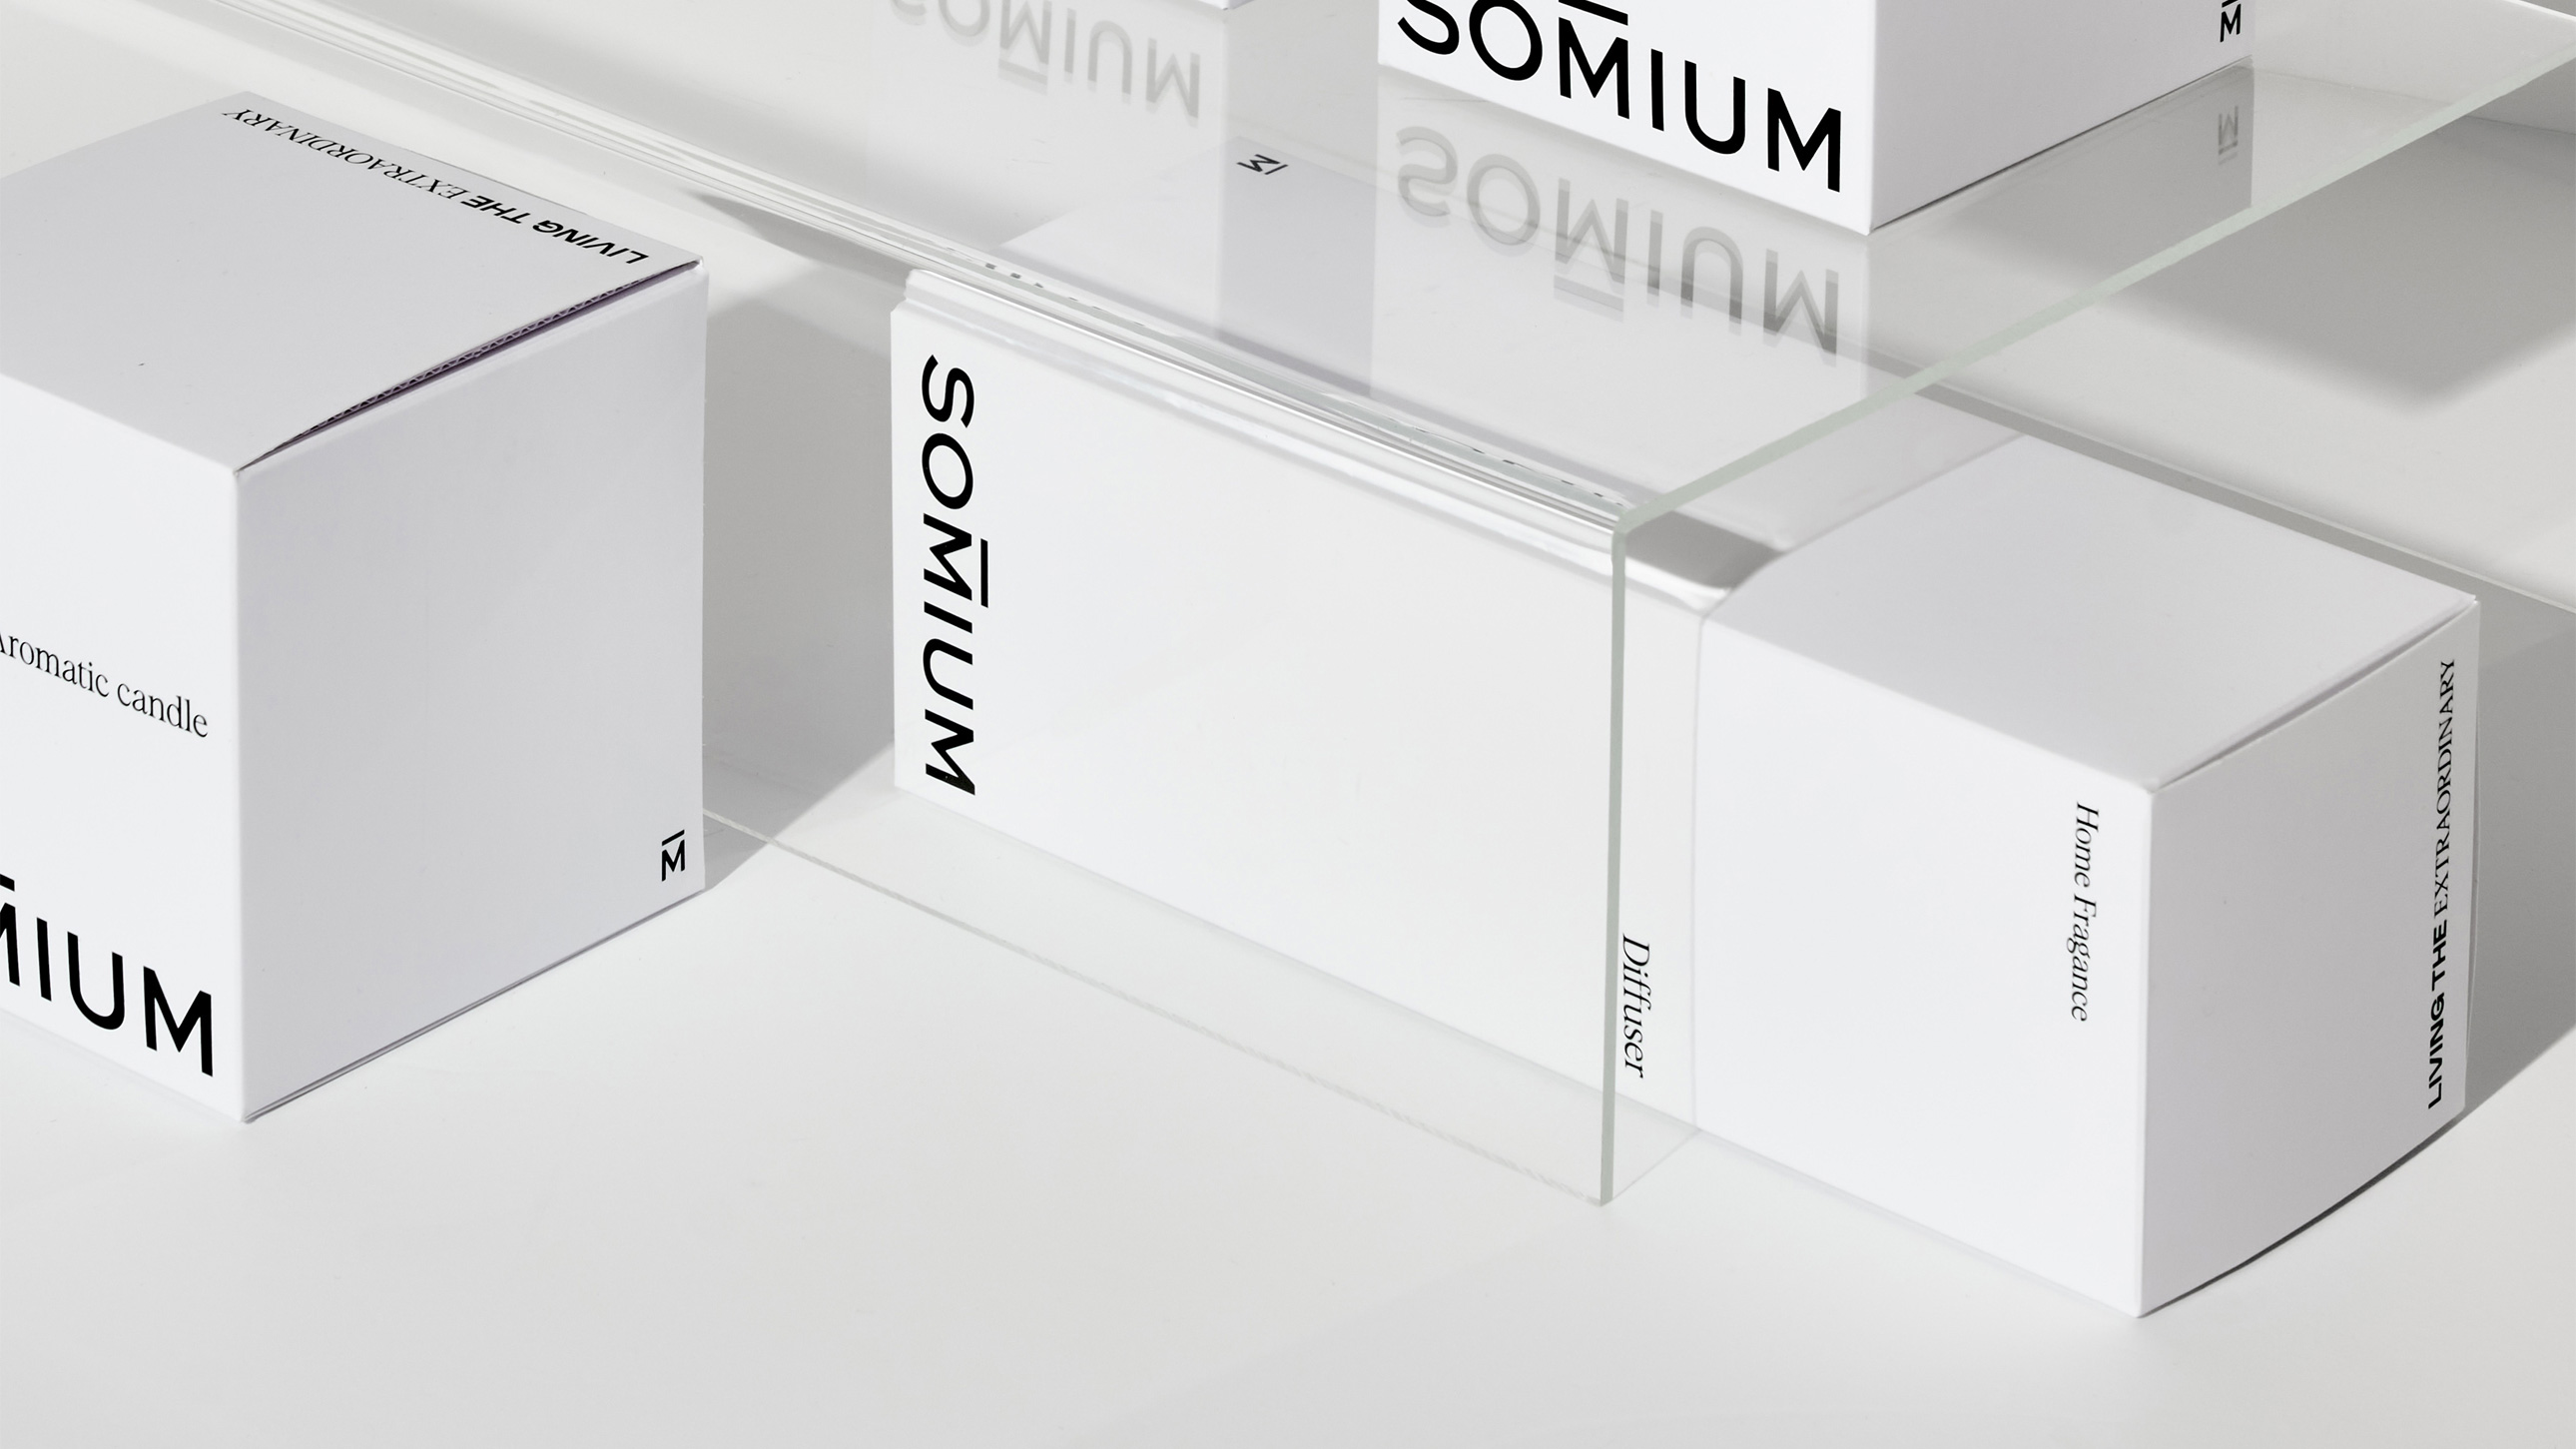 diseno-packaging-grafico-fragance-perfume-somium-evangelisti-3.jpg